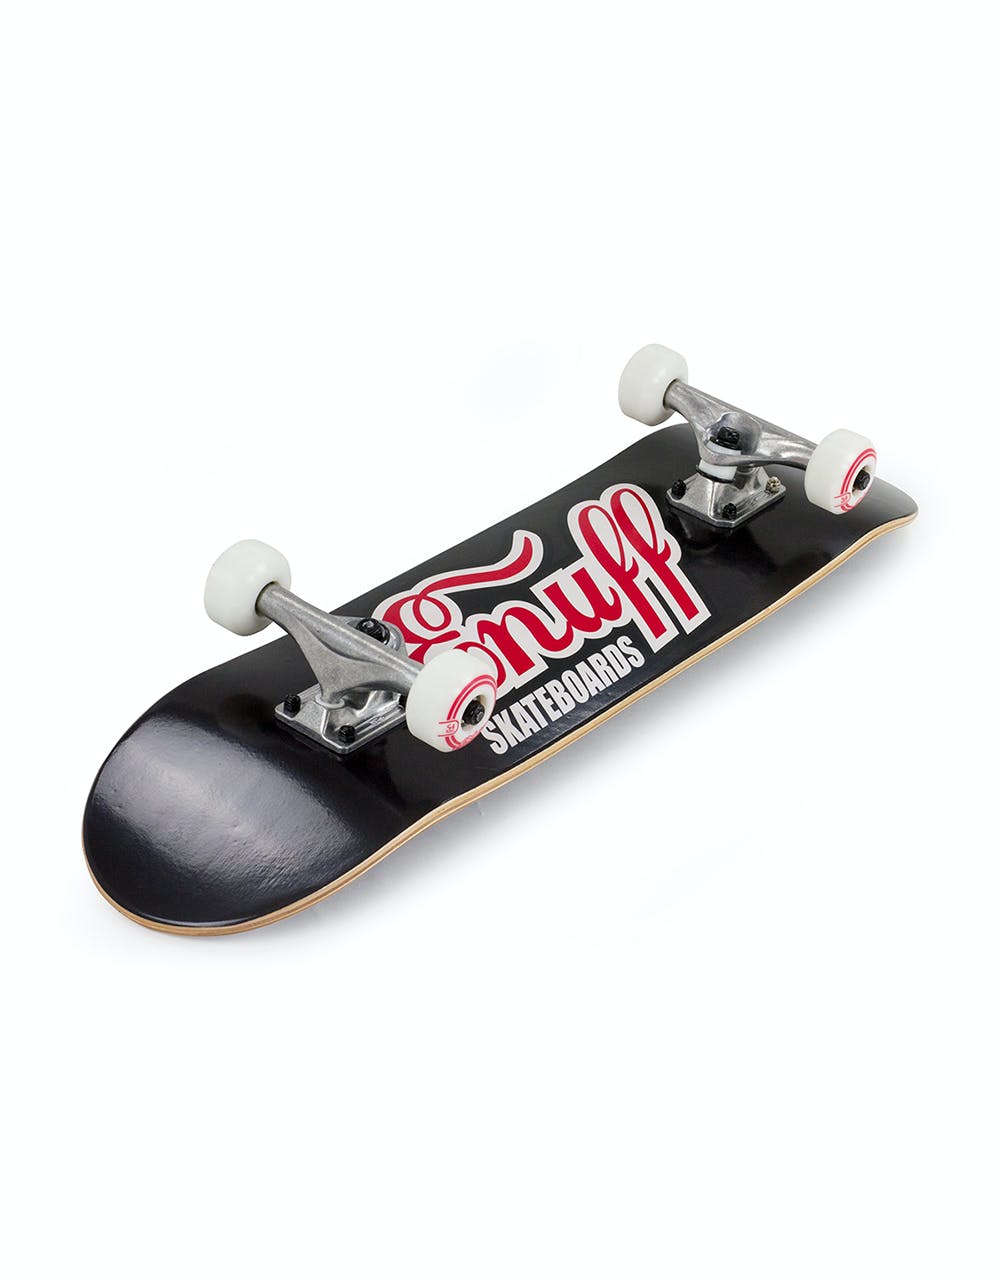 Enuff Classic Logo Mini Complete Skateboard - 7.25"